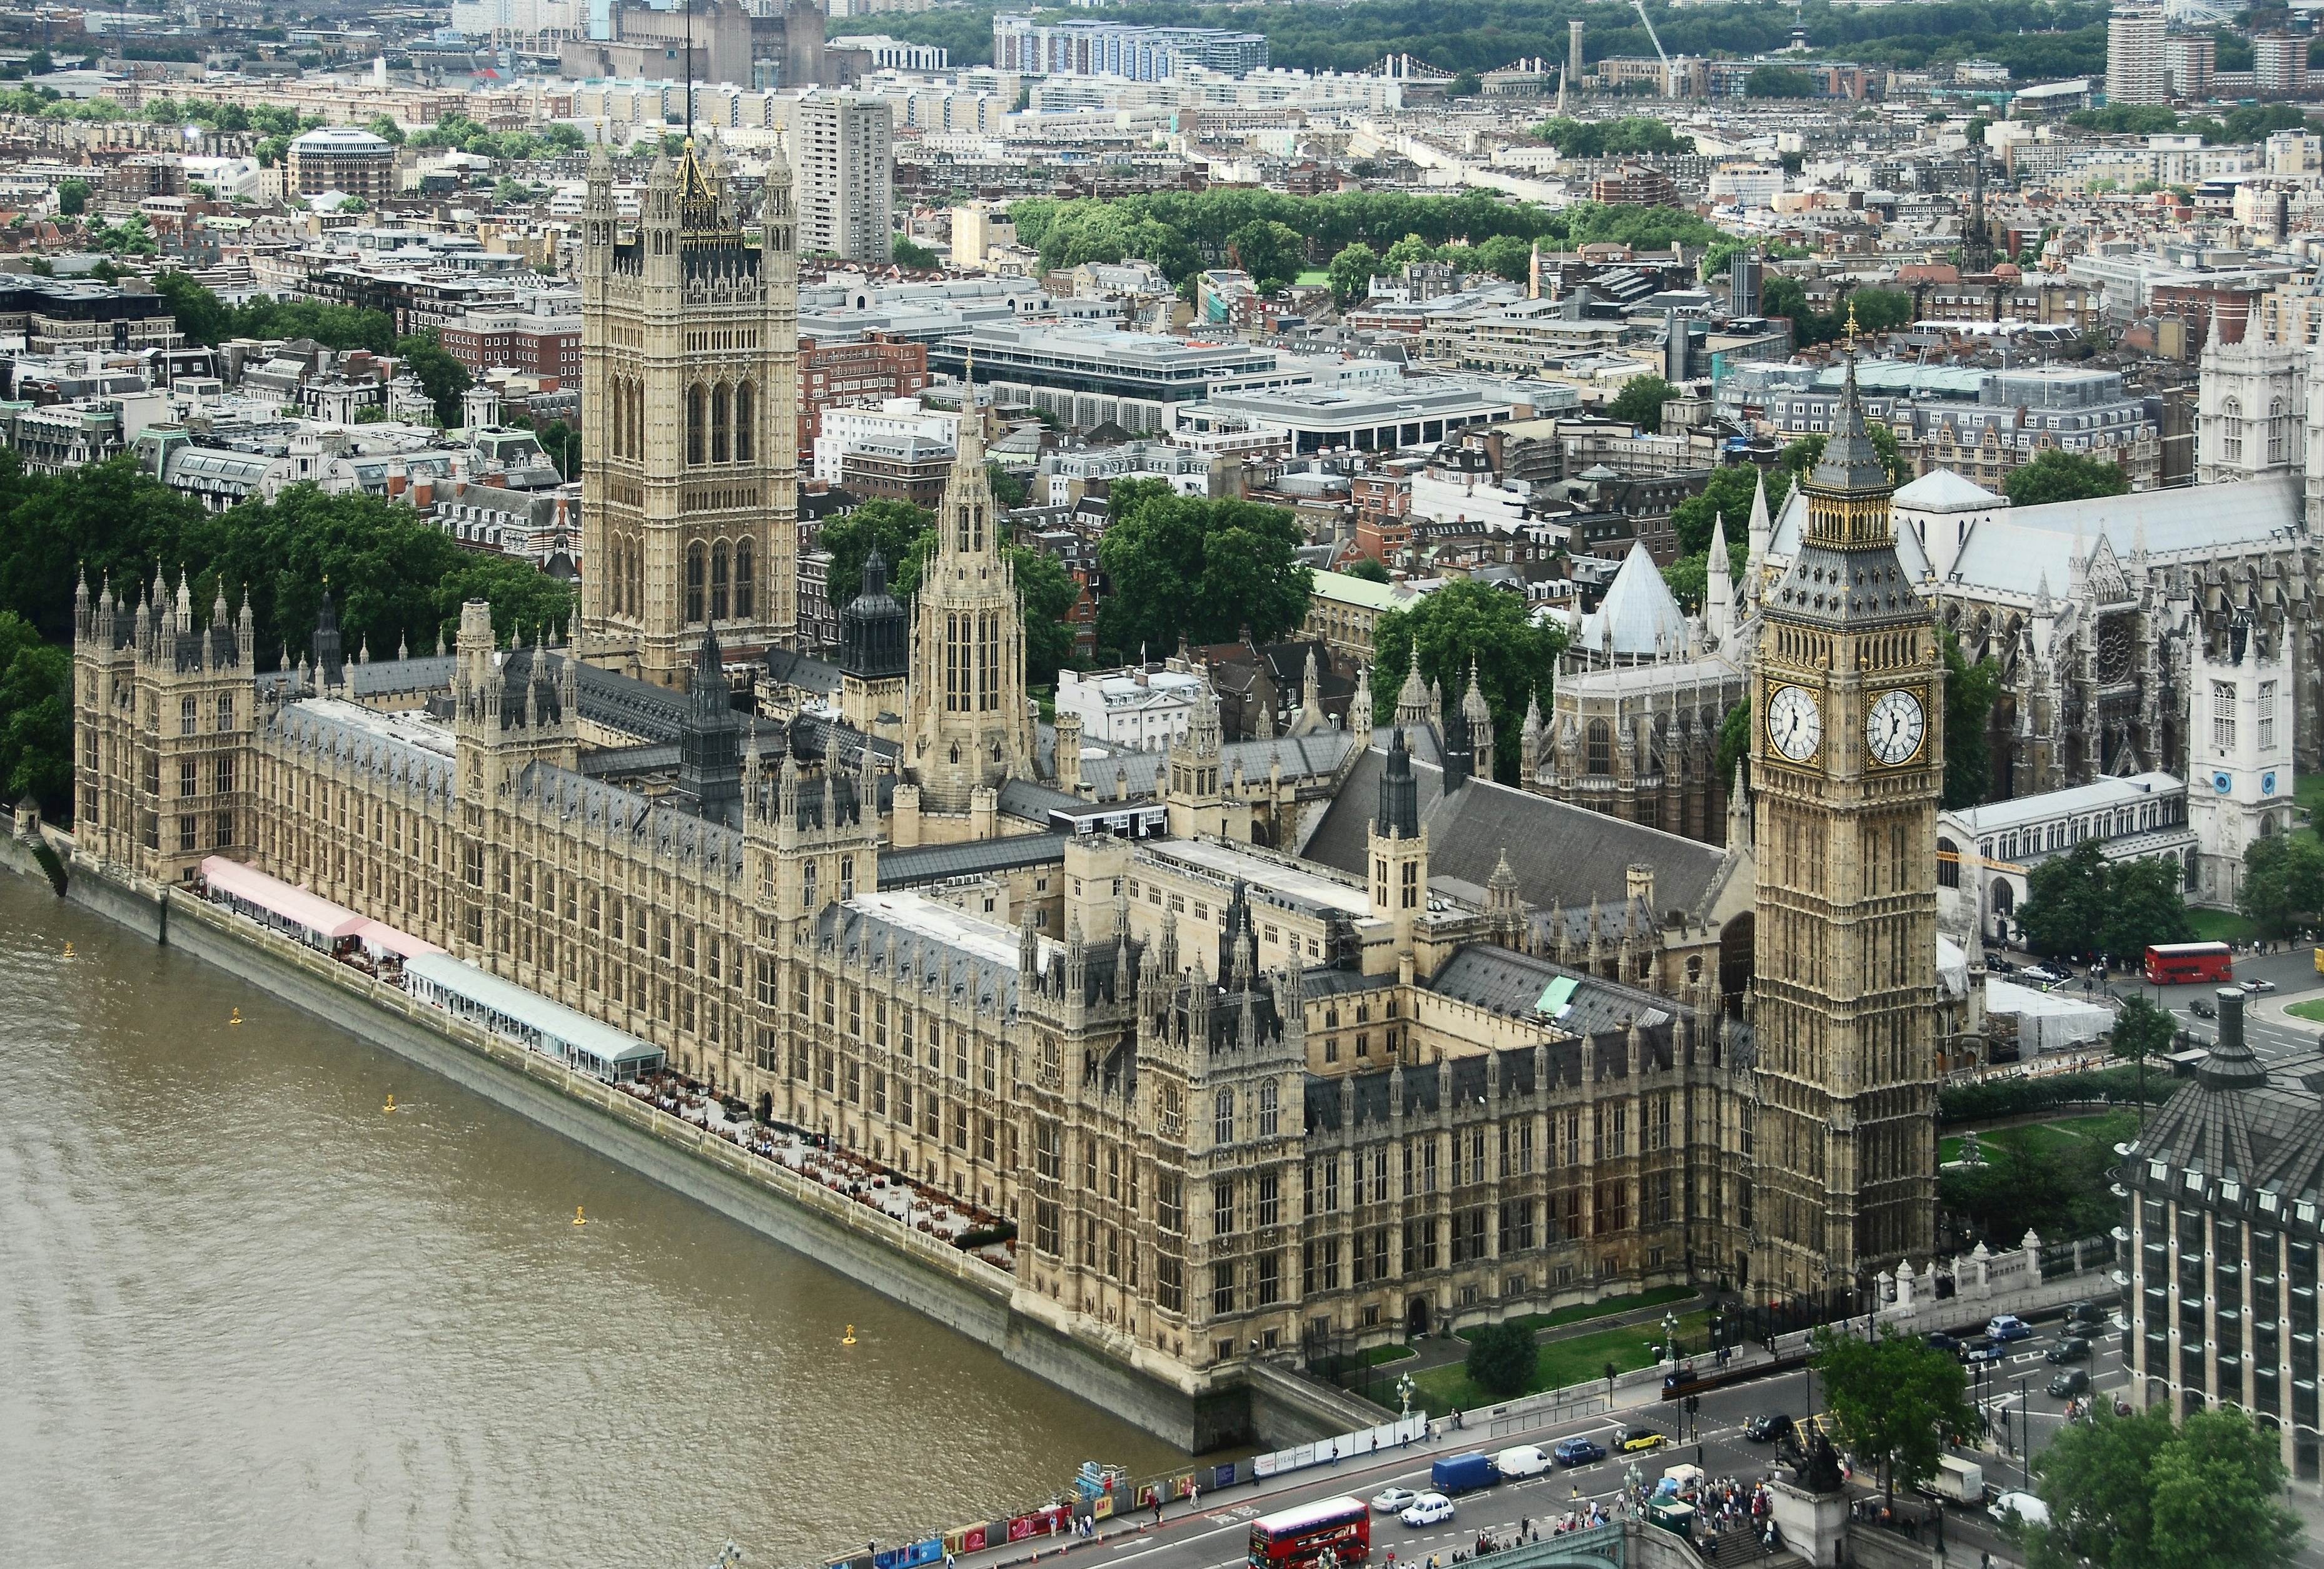 Westminster palace photo